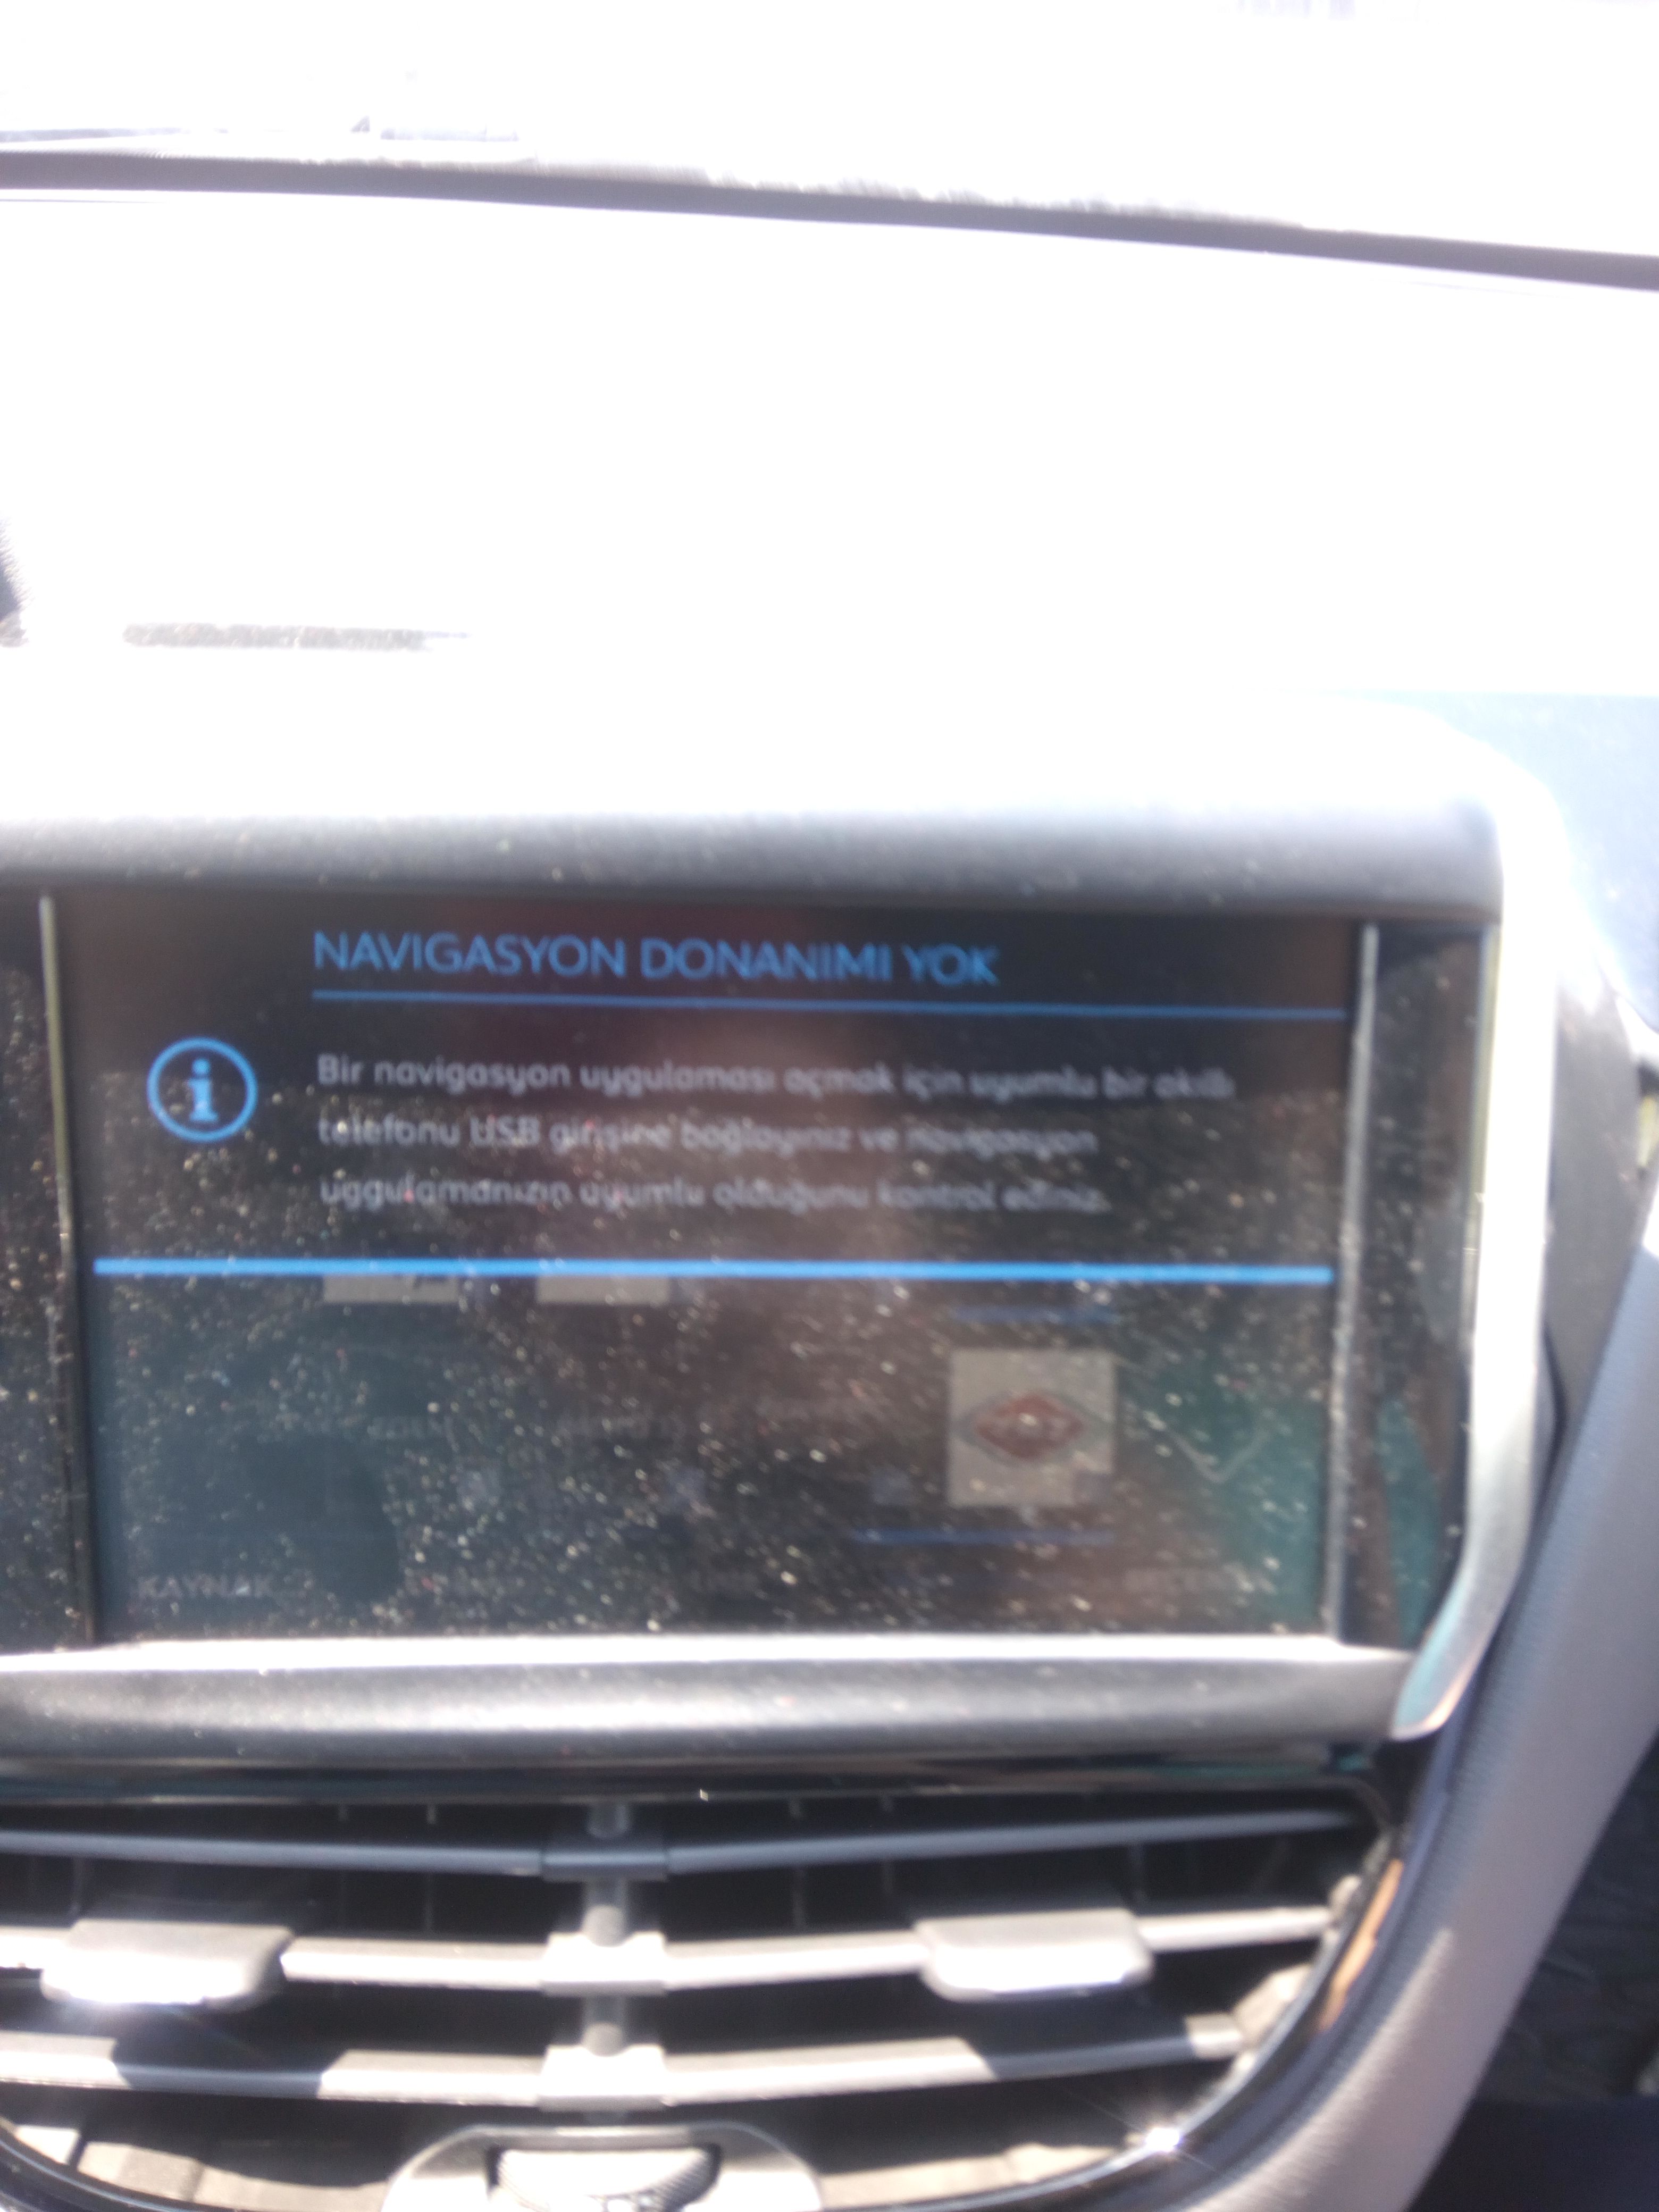 Peugeot 208 navigasyon nasıl açılır? | Technopat Sosyal